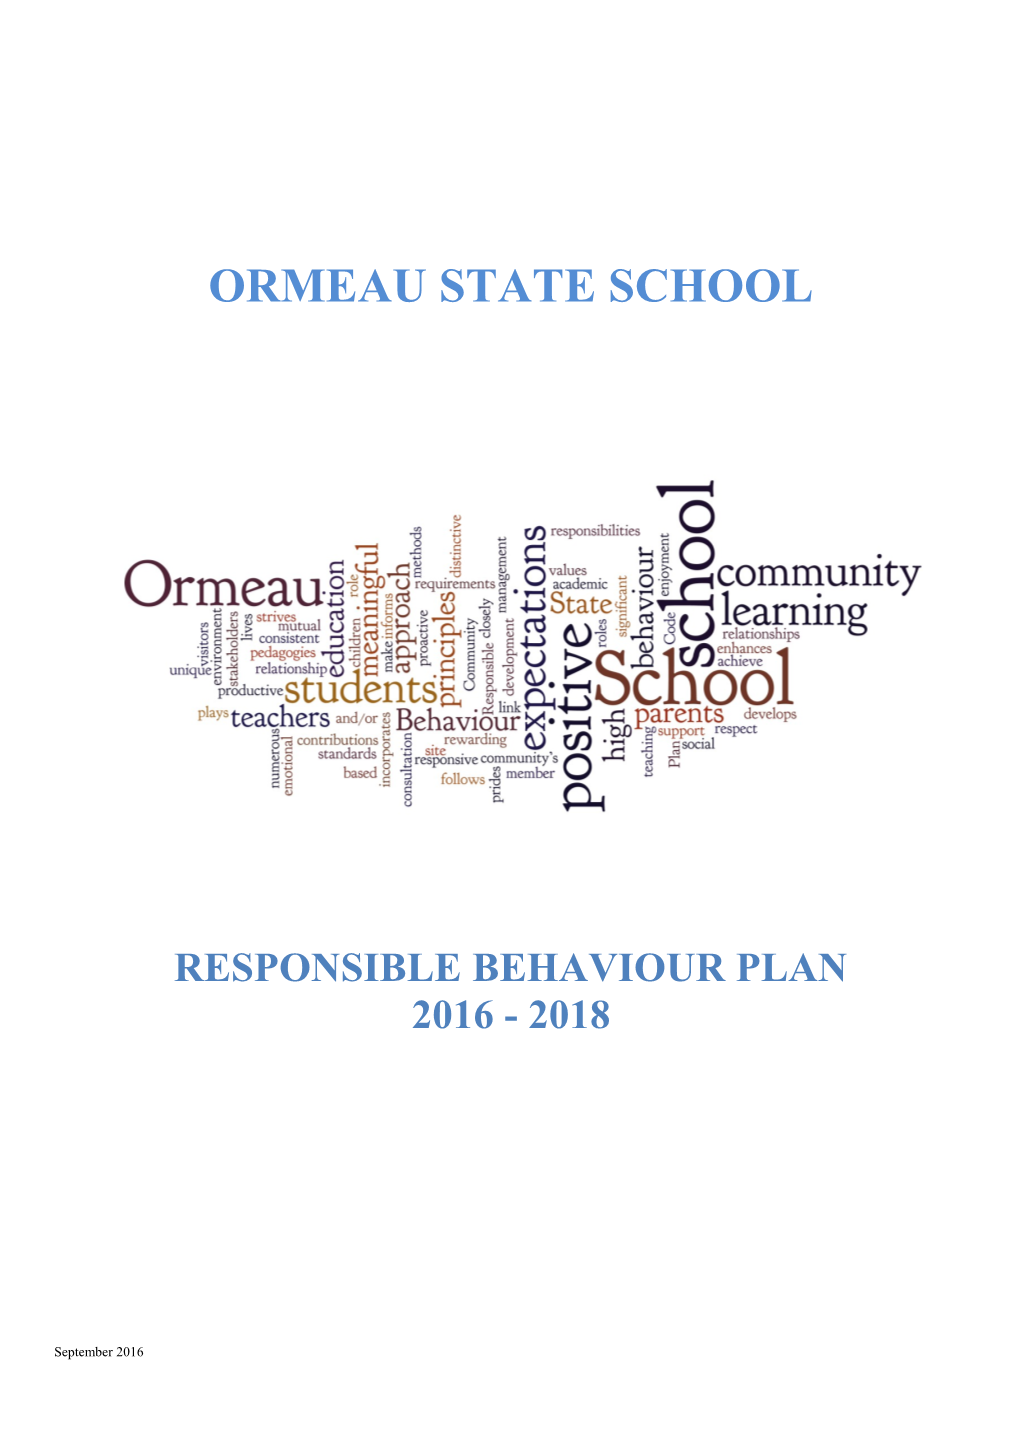 Ormeau State School